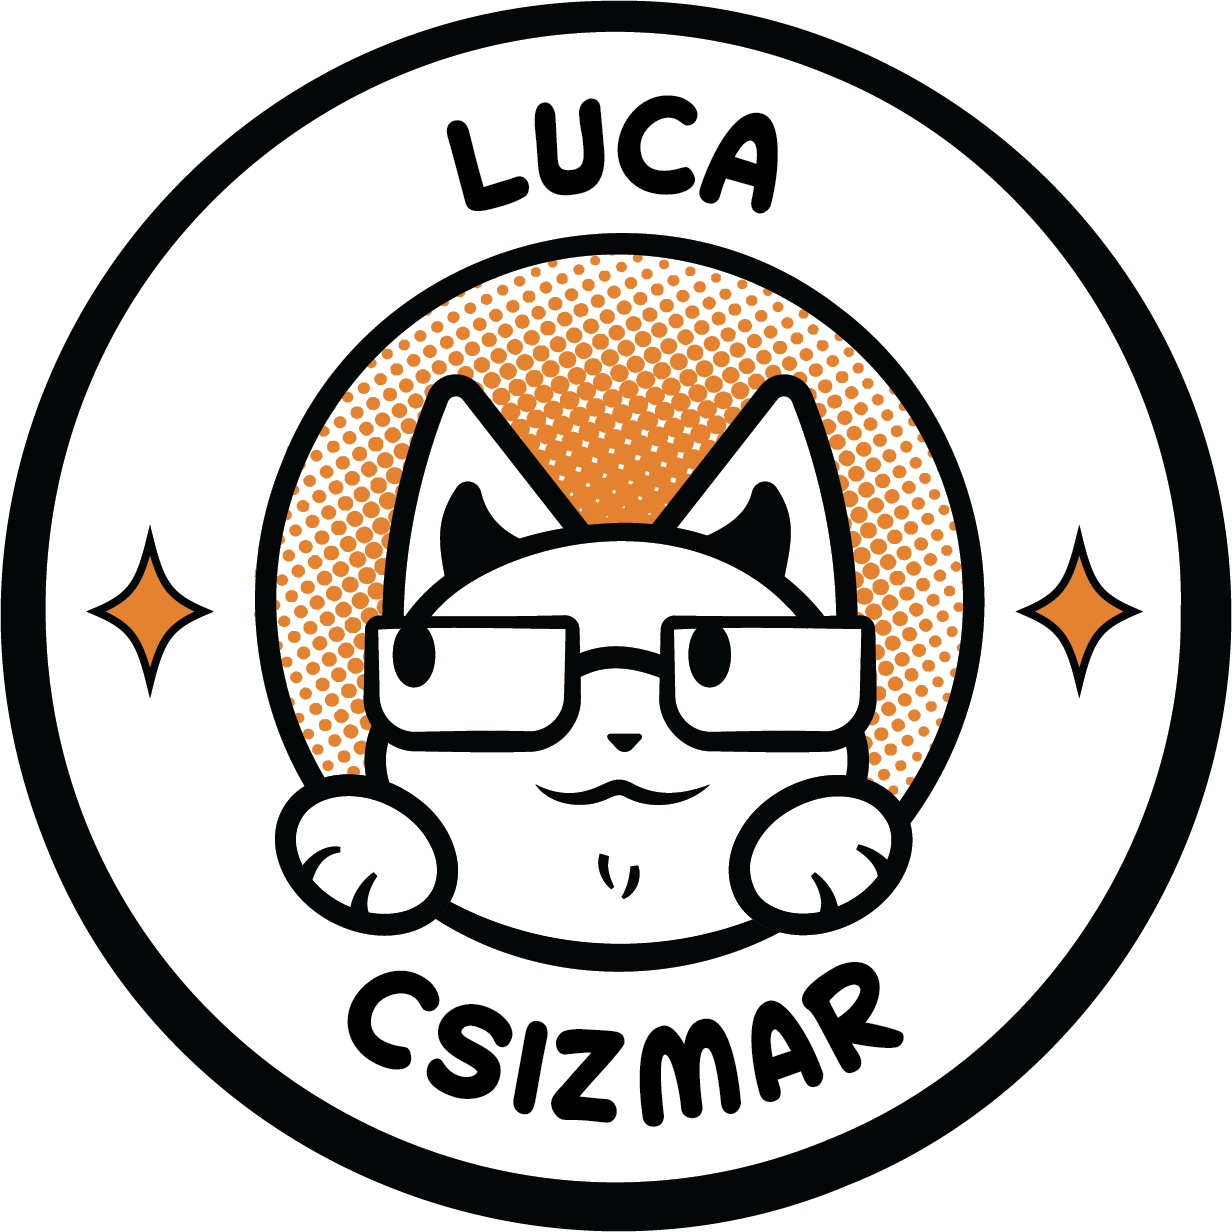 Luca Csizmar